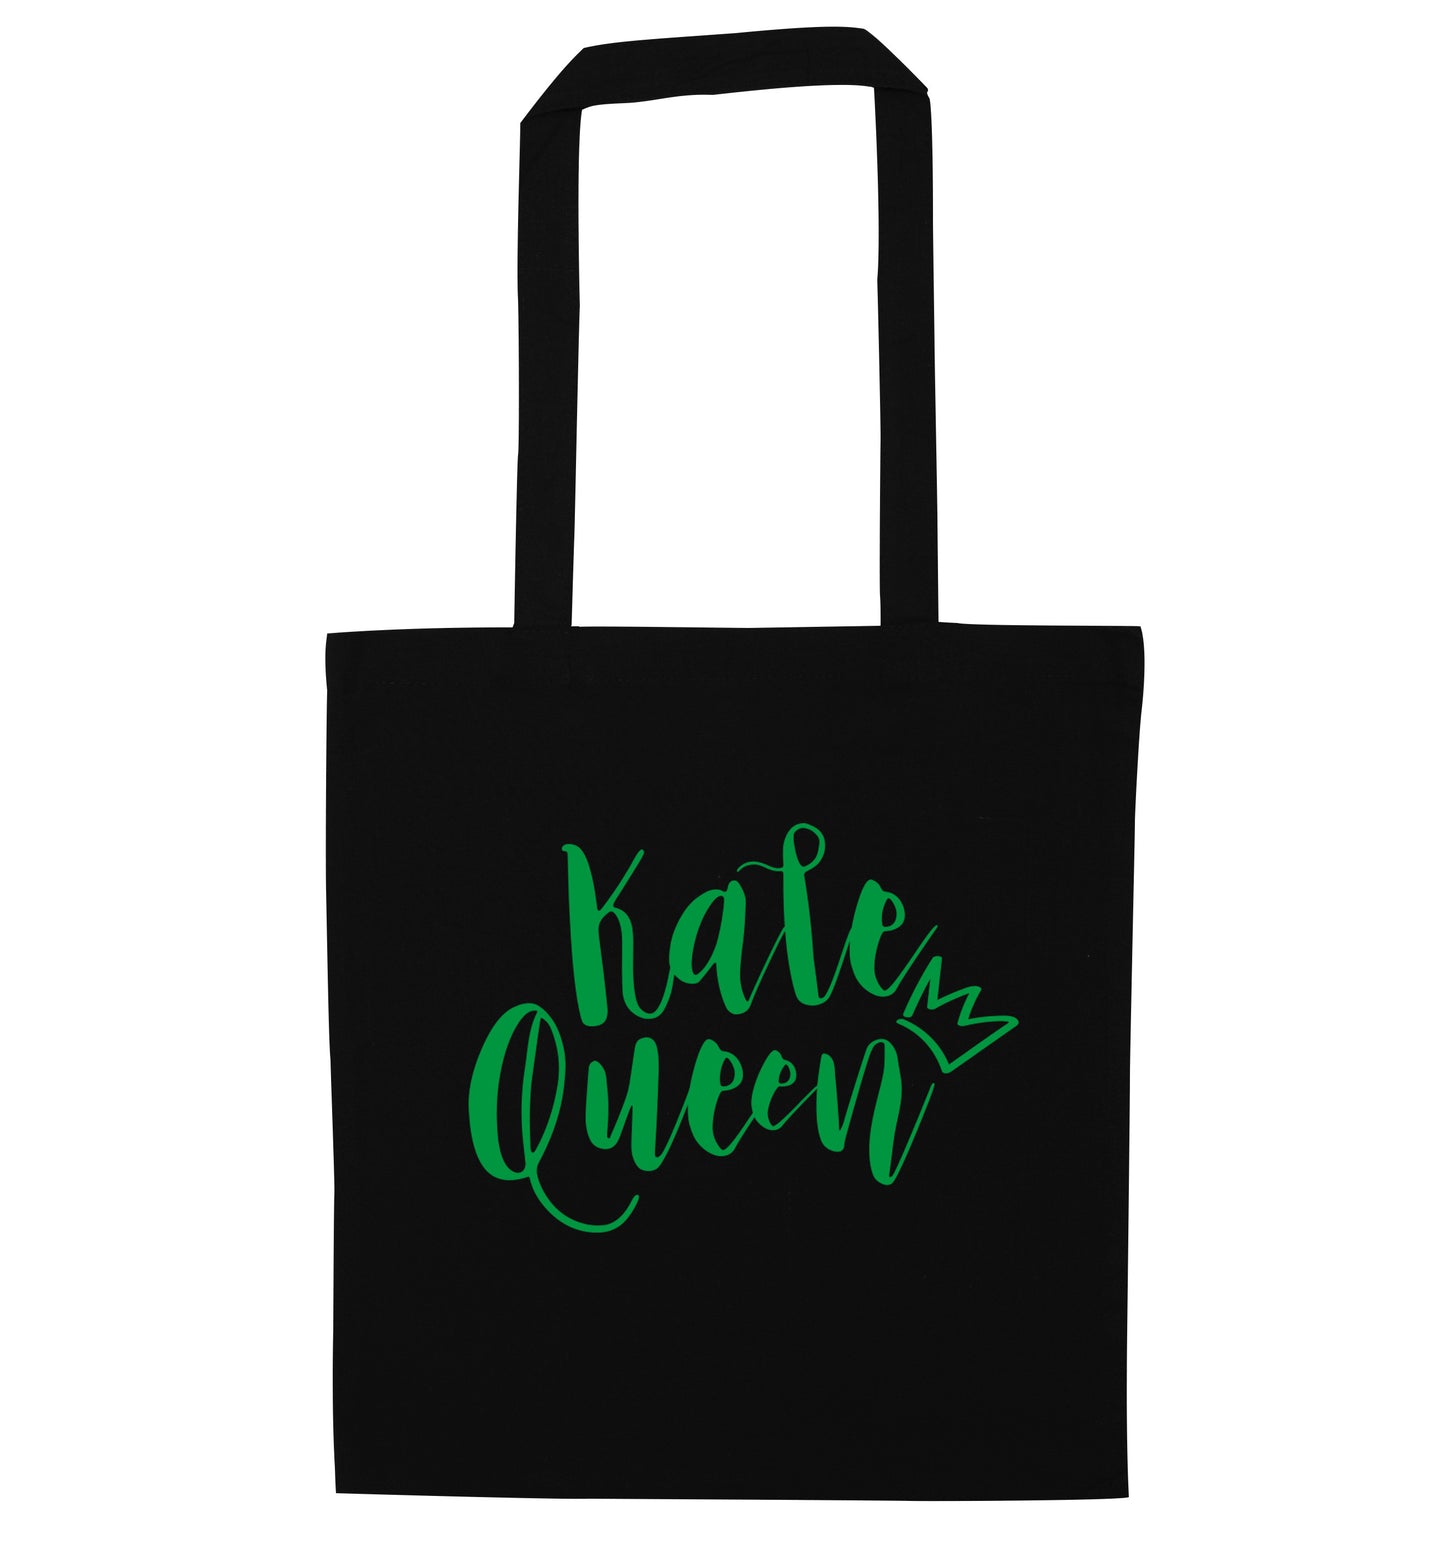 Kale Queen black tote bag